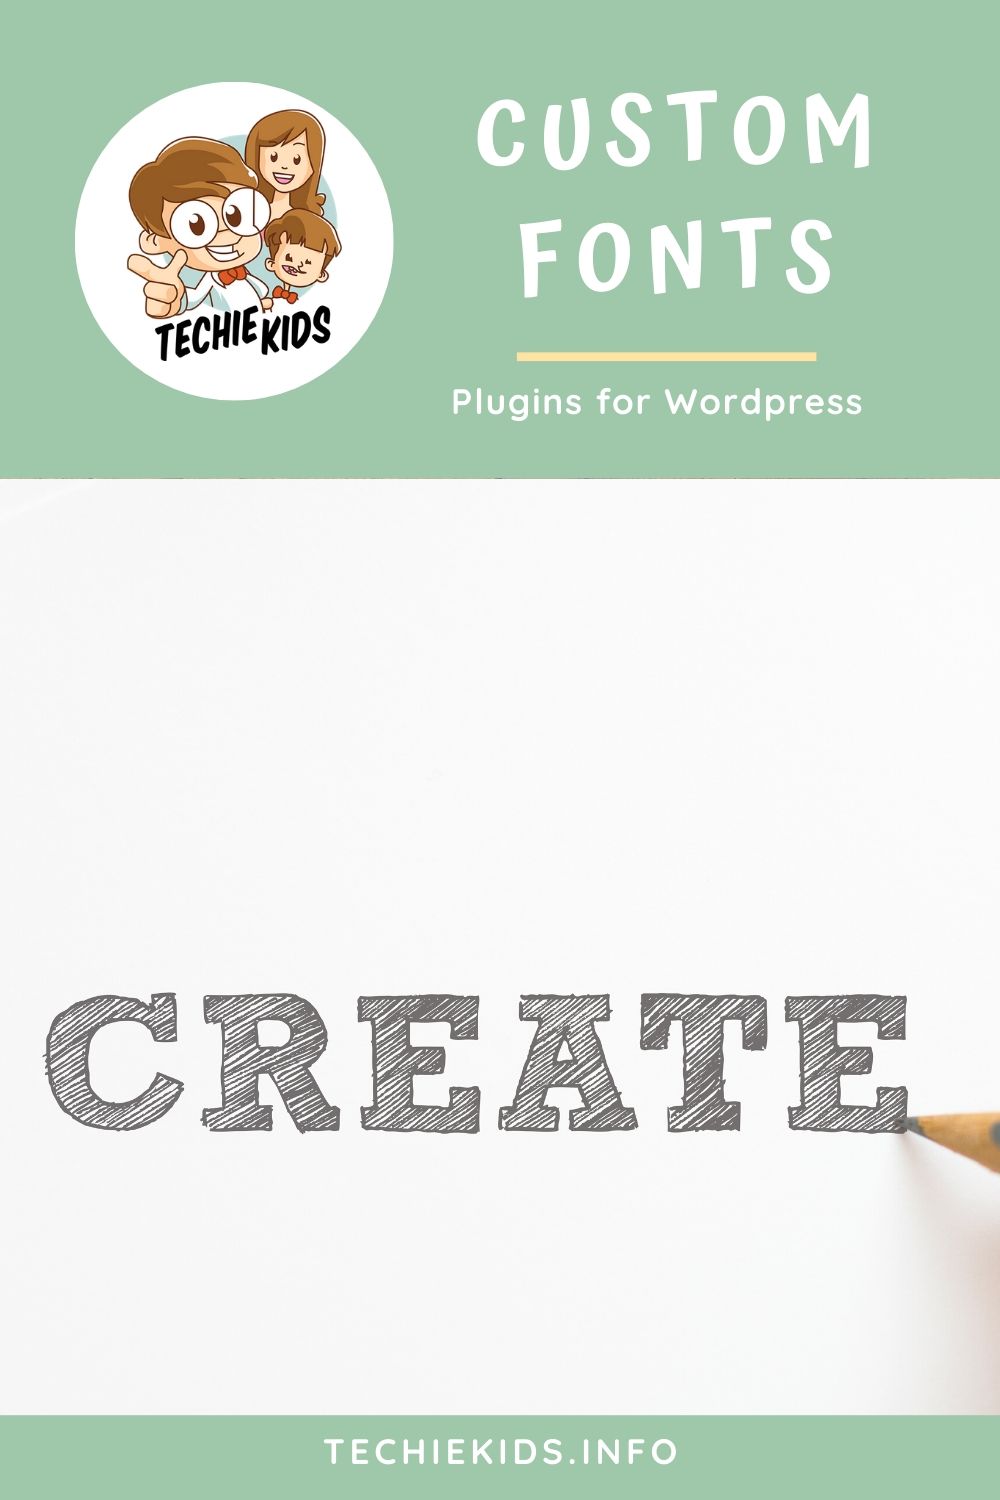 The Top 5 WordPress Plugins for Adding Custom Fonts